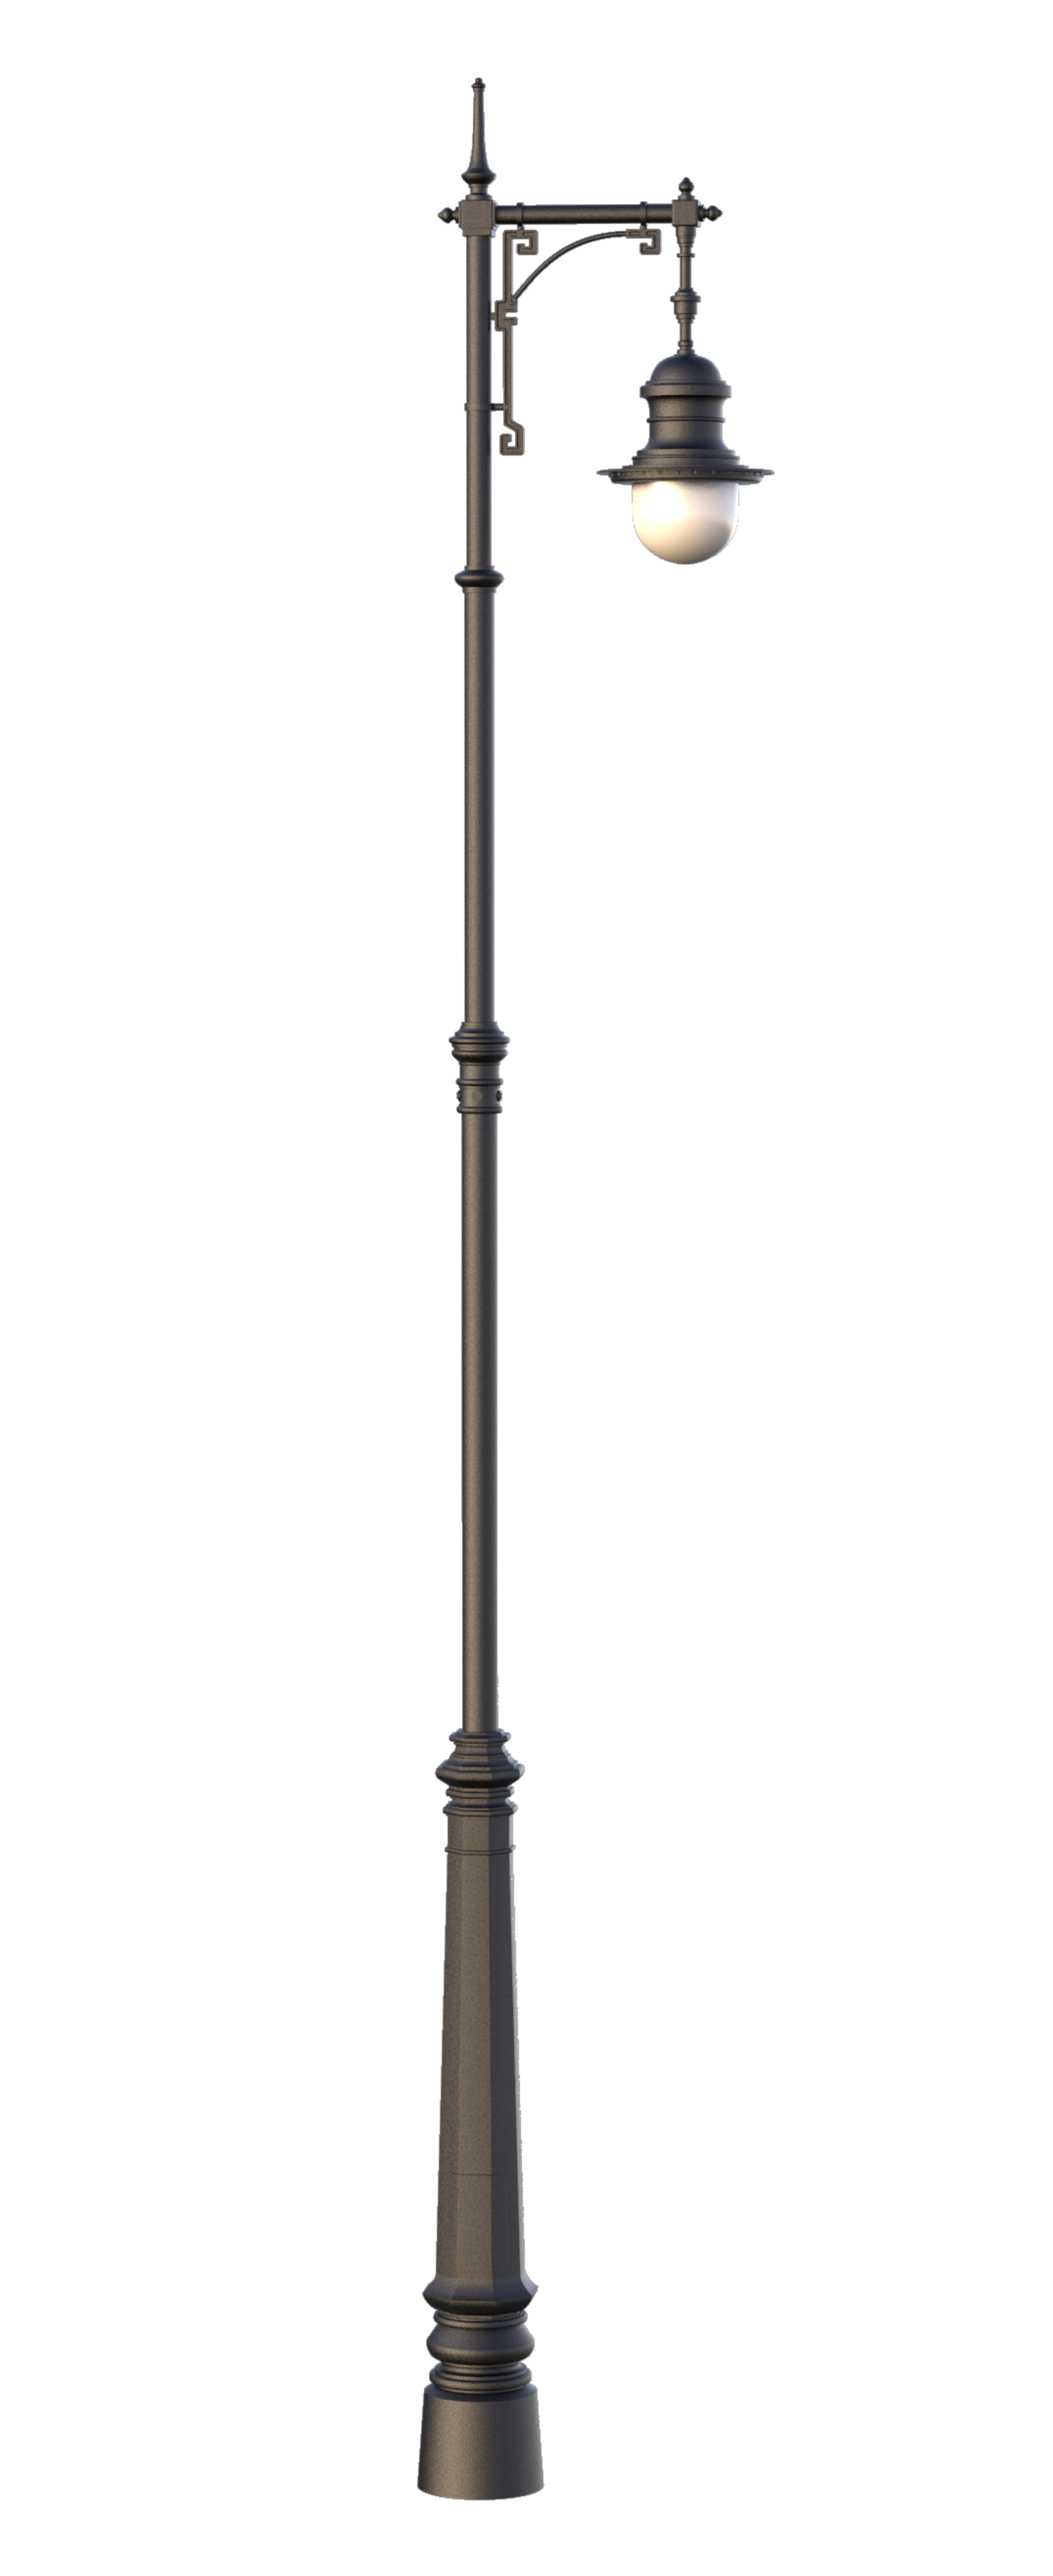 HERITAGEGLOW Classic Artistic cast iron lamp pole